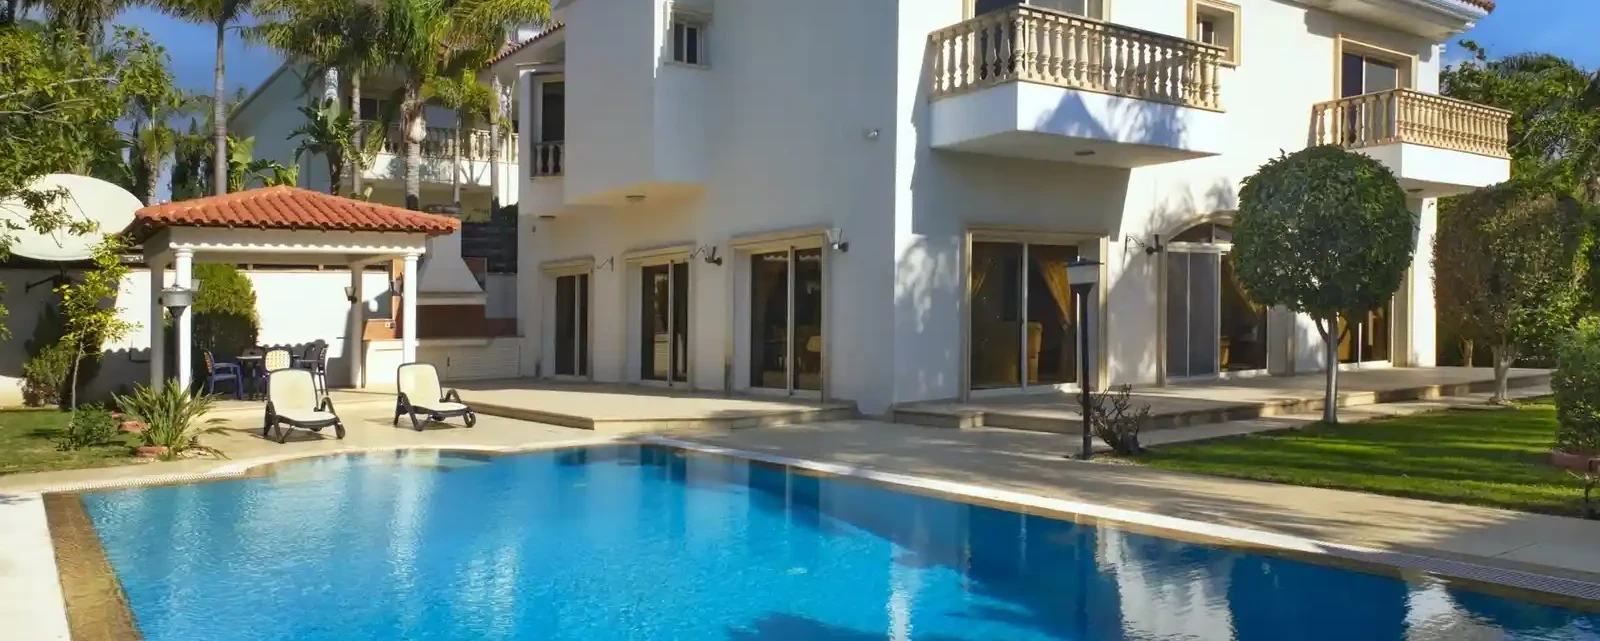 4-bedroom villa fоr sаle €5.200.000, image 1